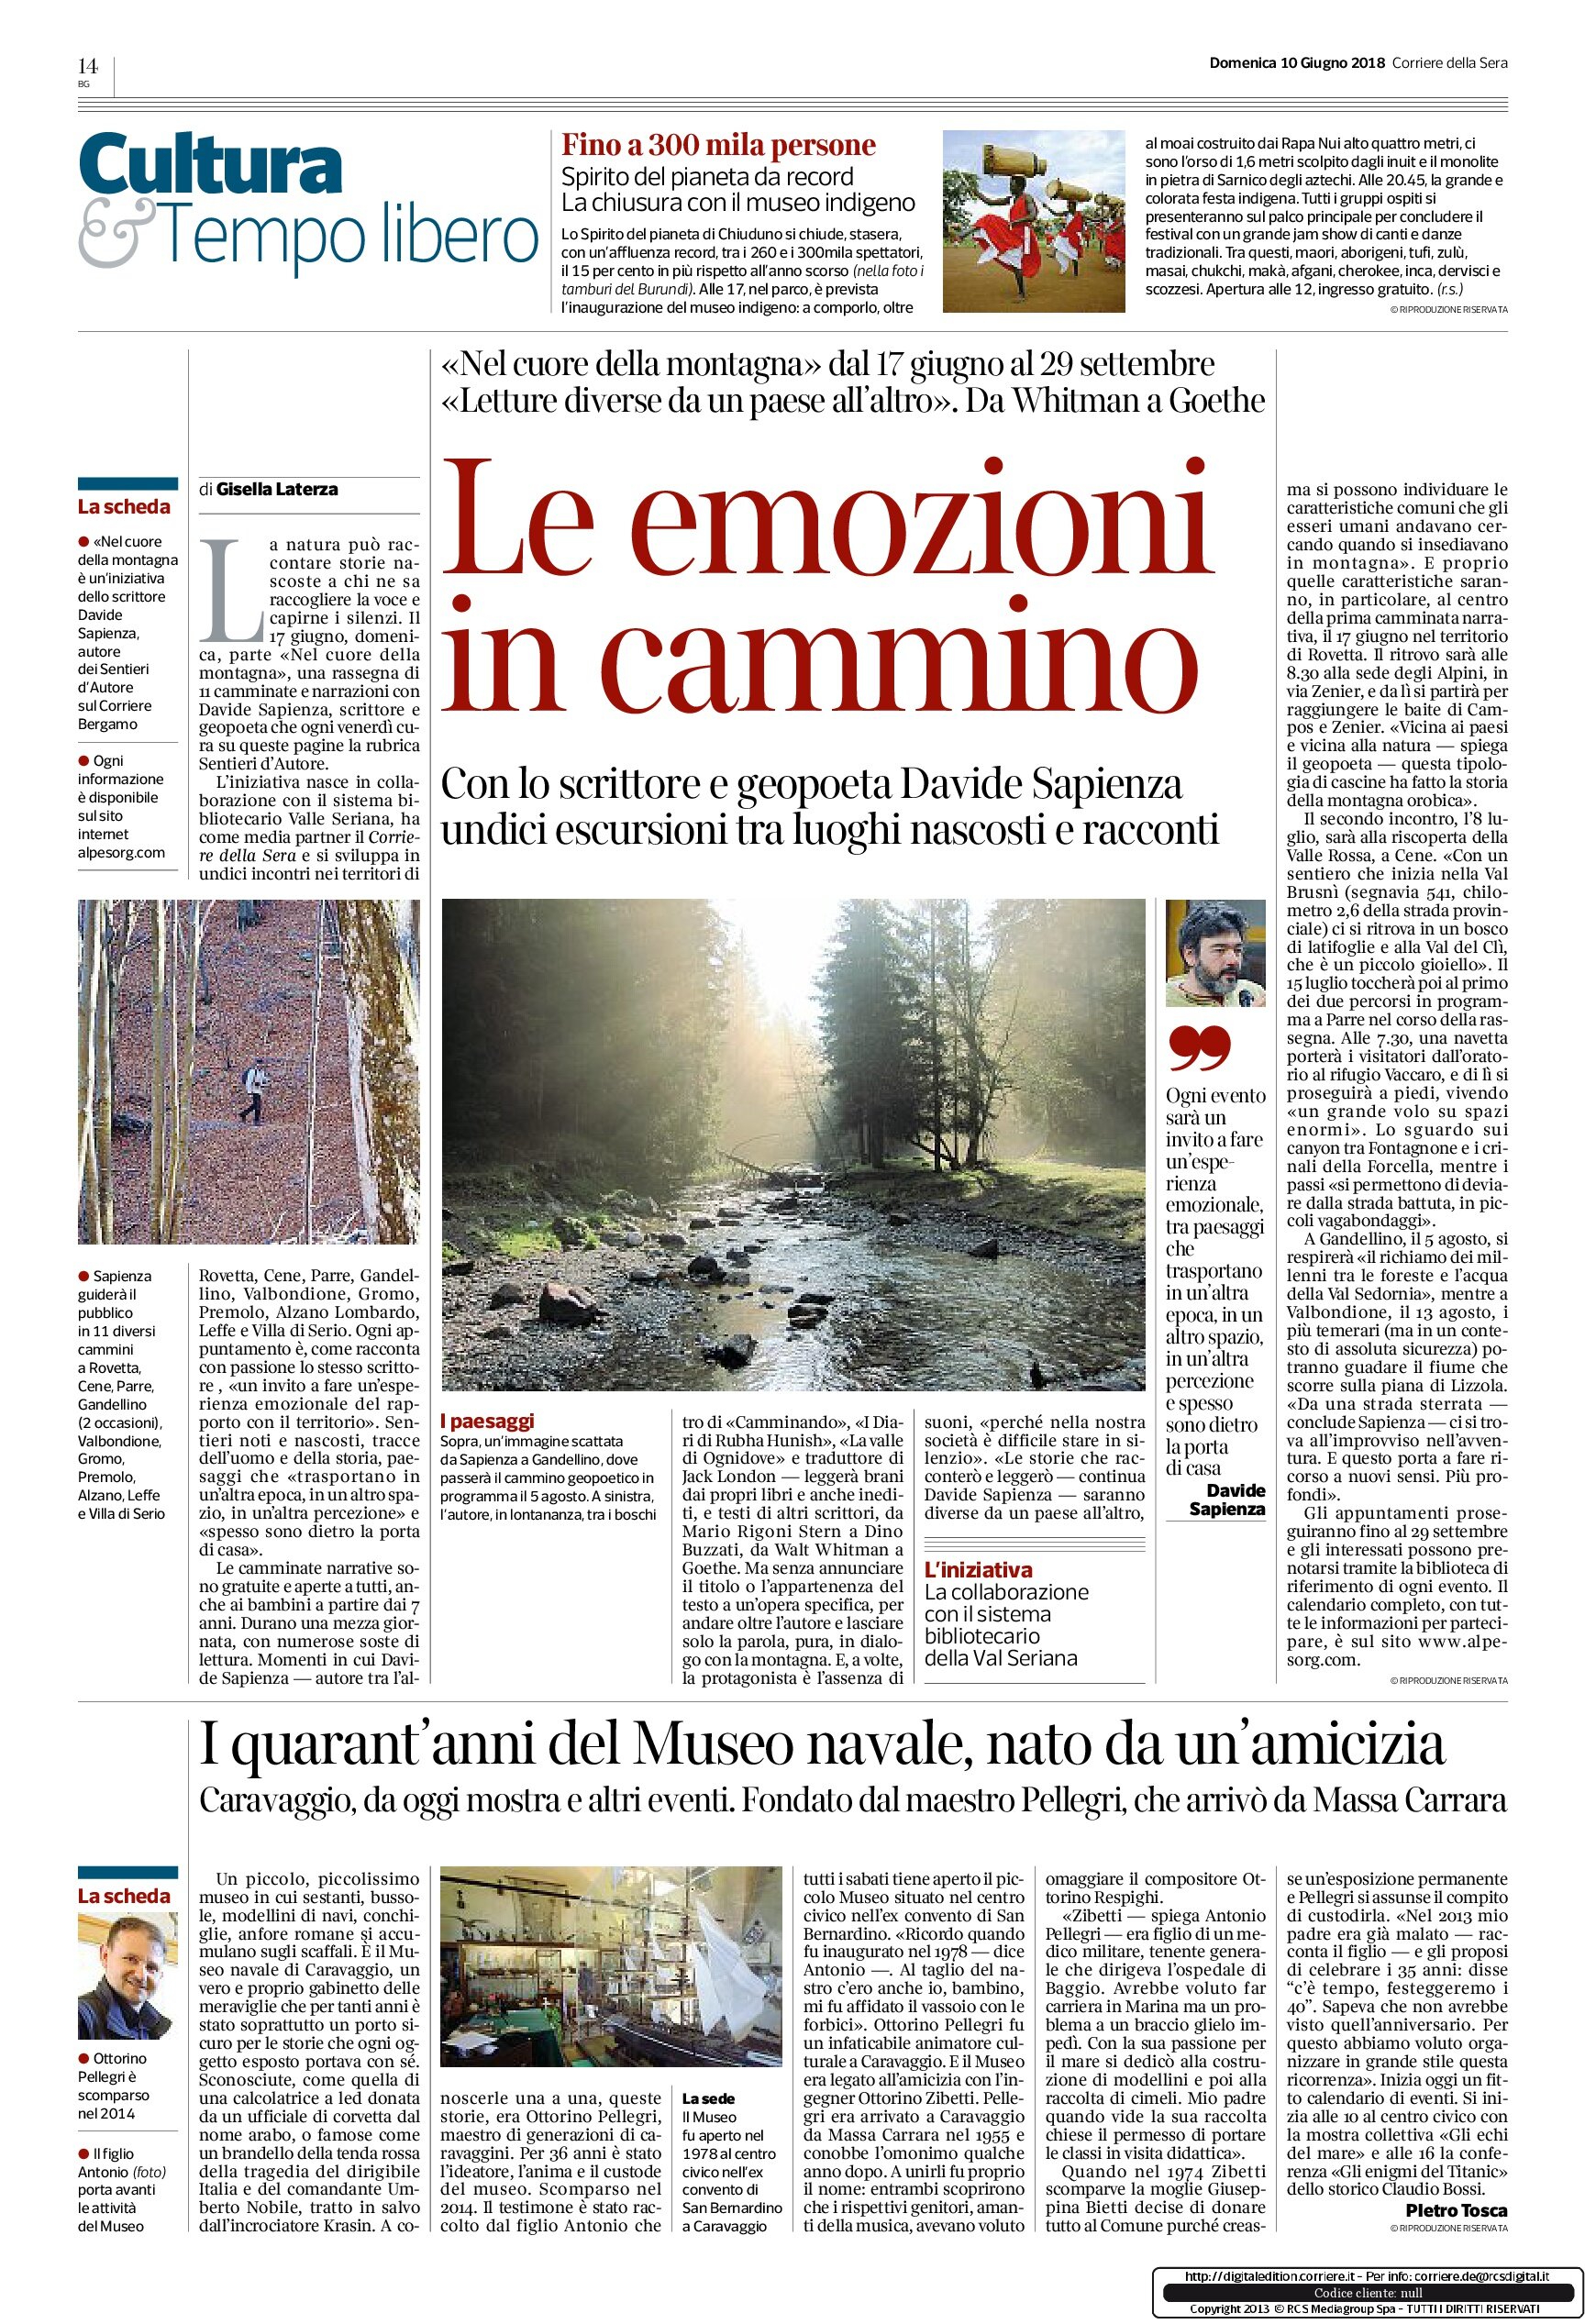 NCDM Corriere Bergamo 10.6.2018.jpg